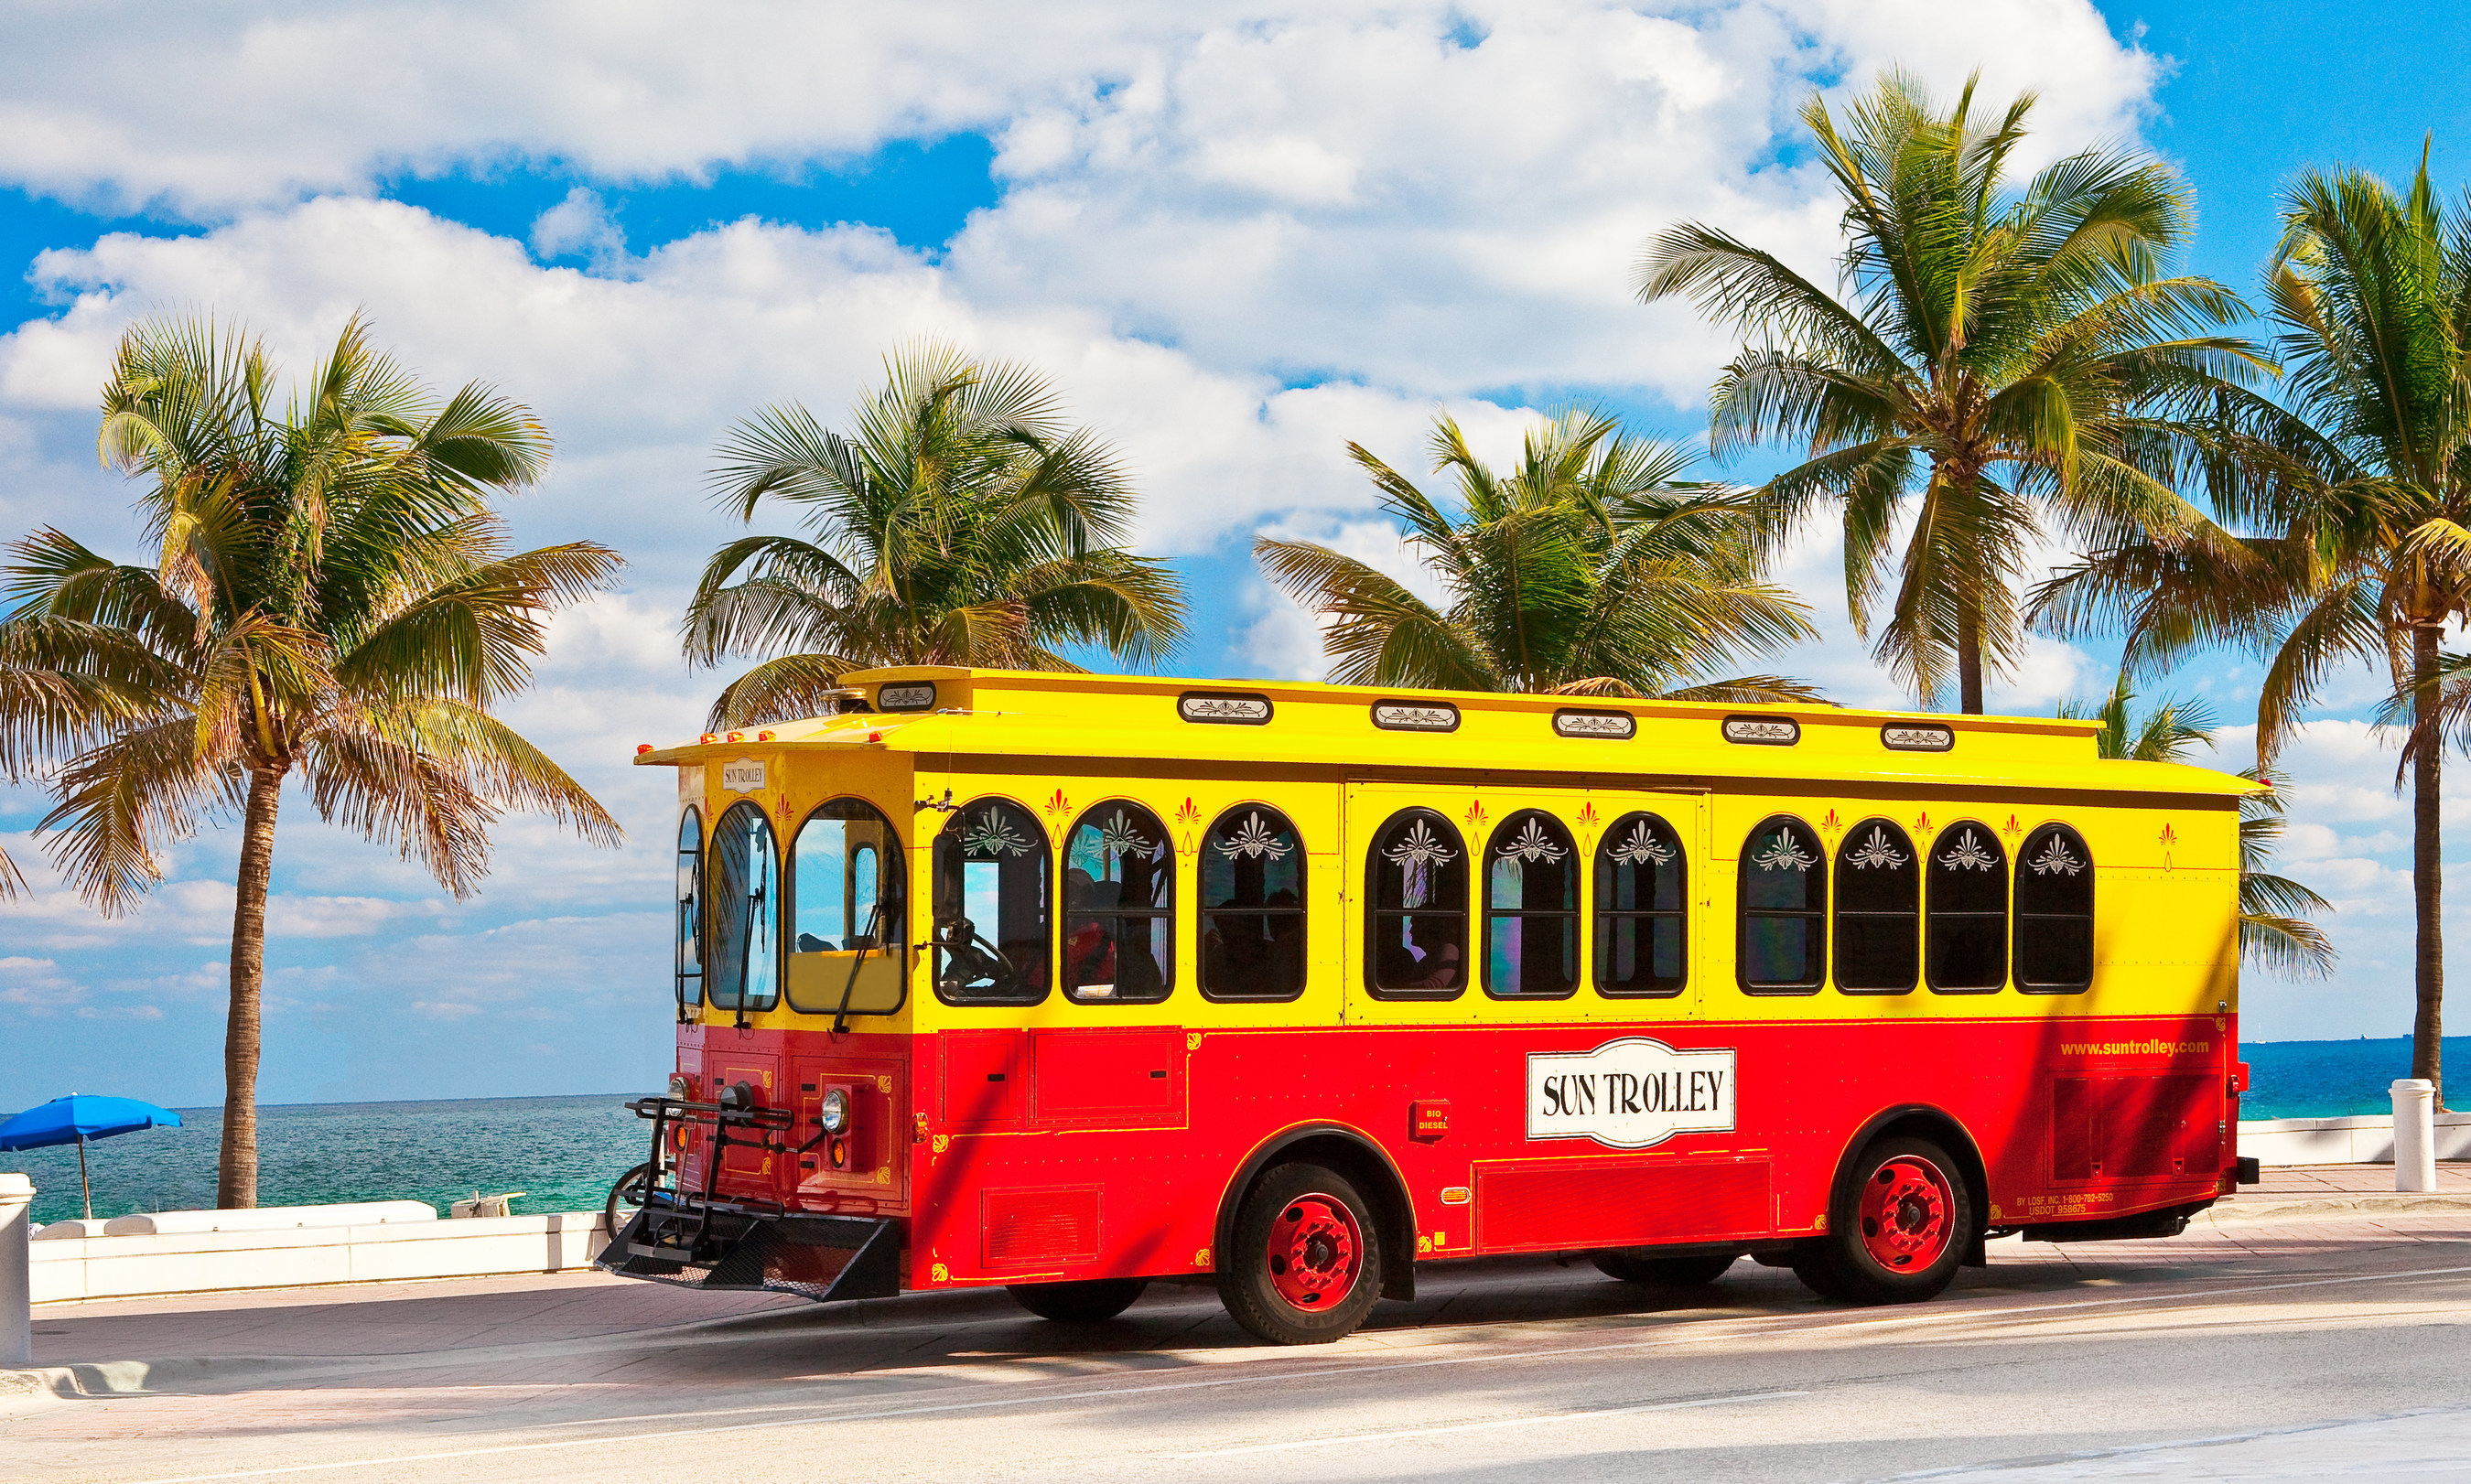 The Sun Trolley is hosting a "Transportation Celebration" event on September 21, 2016.